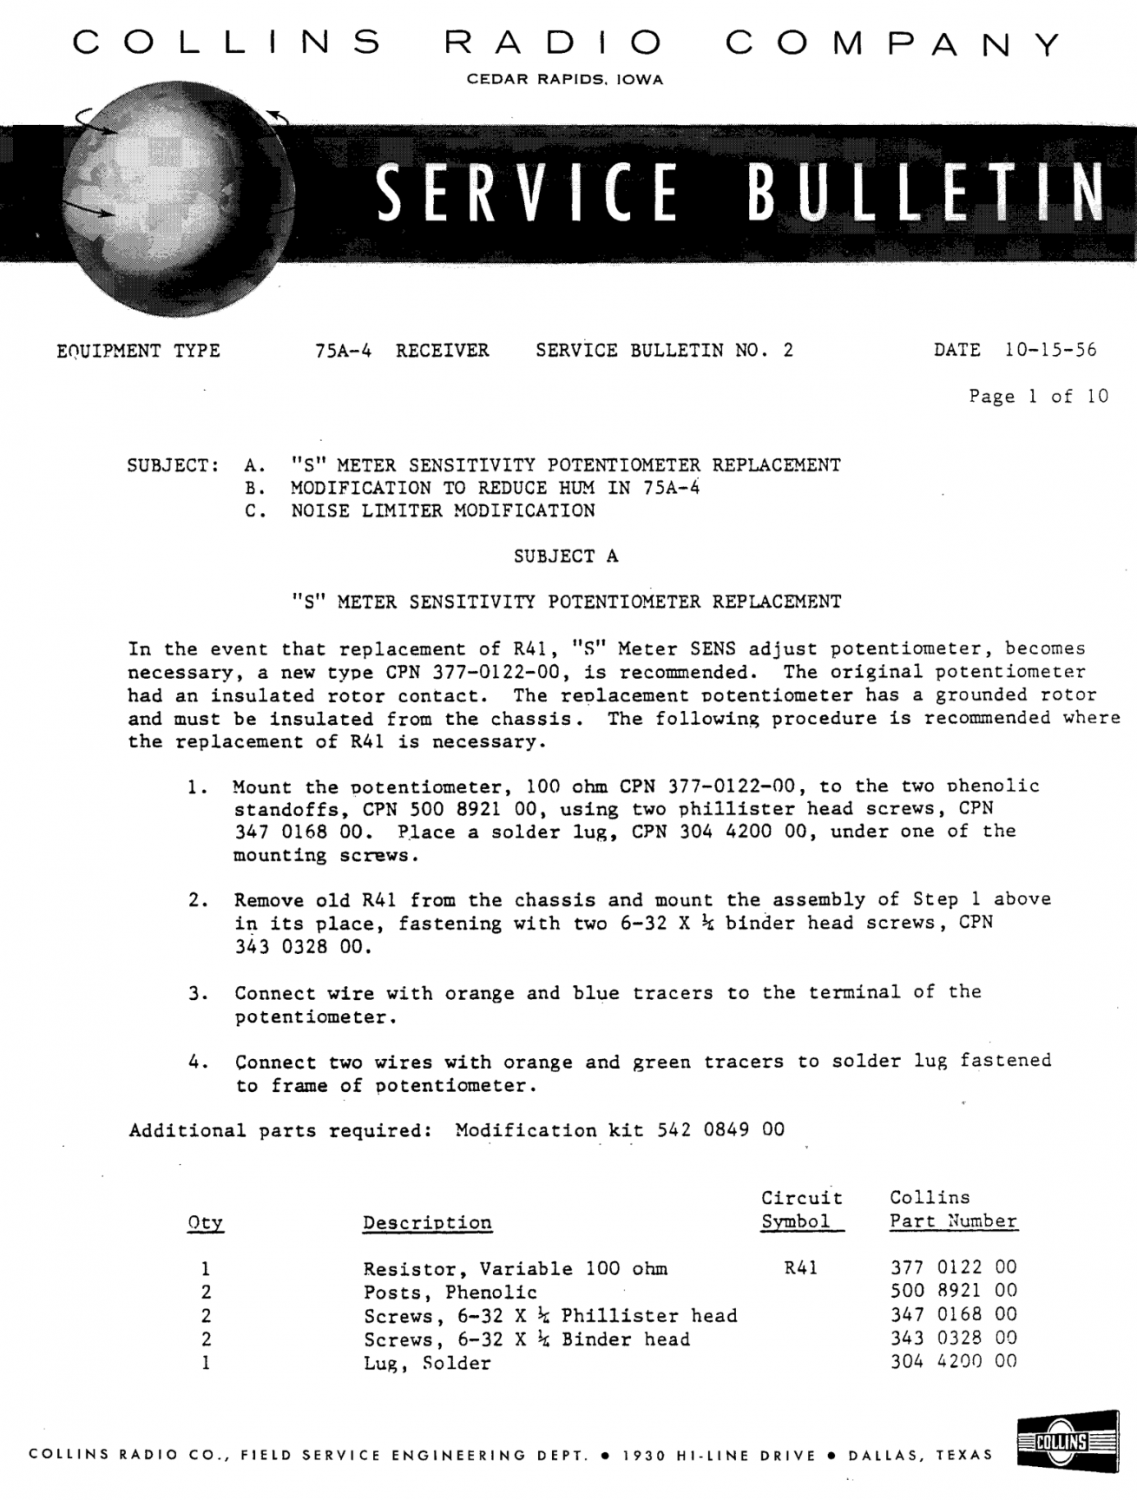 Collins 75A-4 Amateur Band Receiver - Service Bulletin Number 2 - (1956-10)